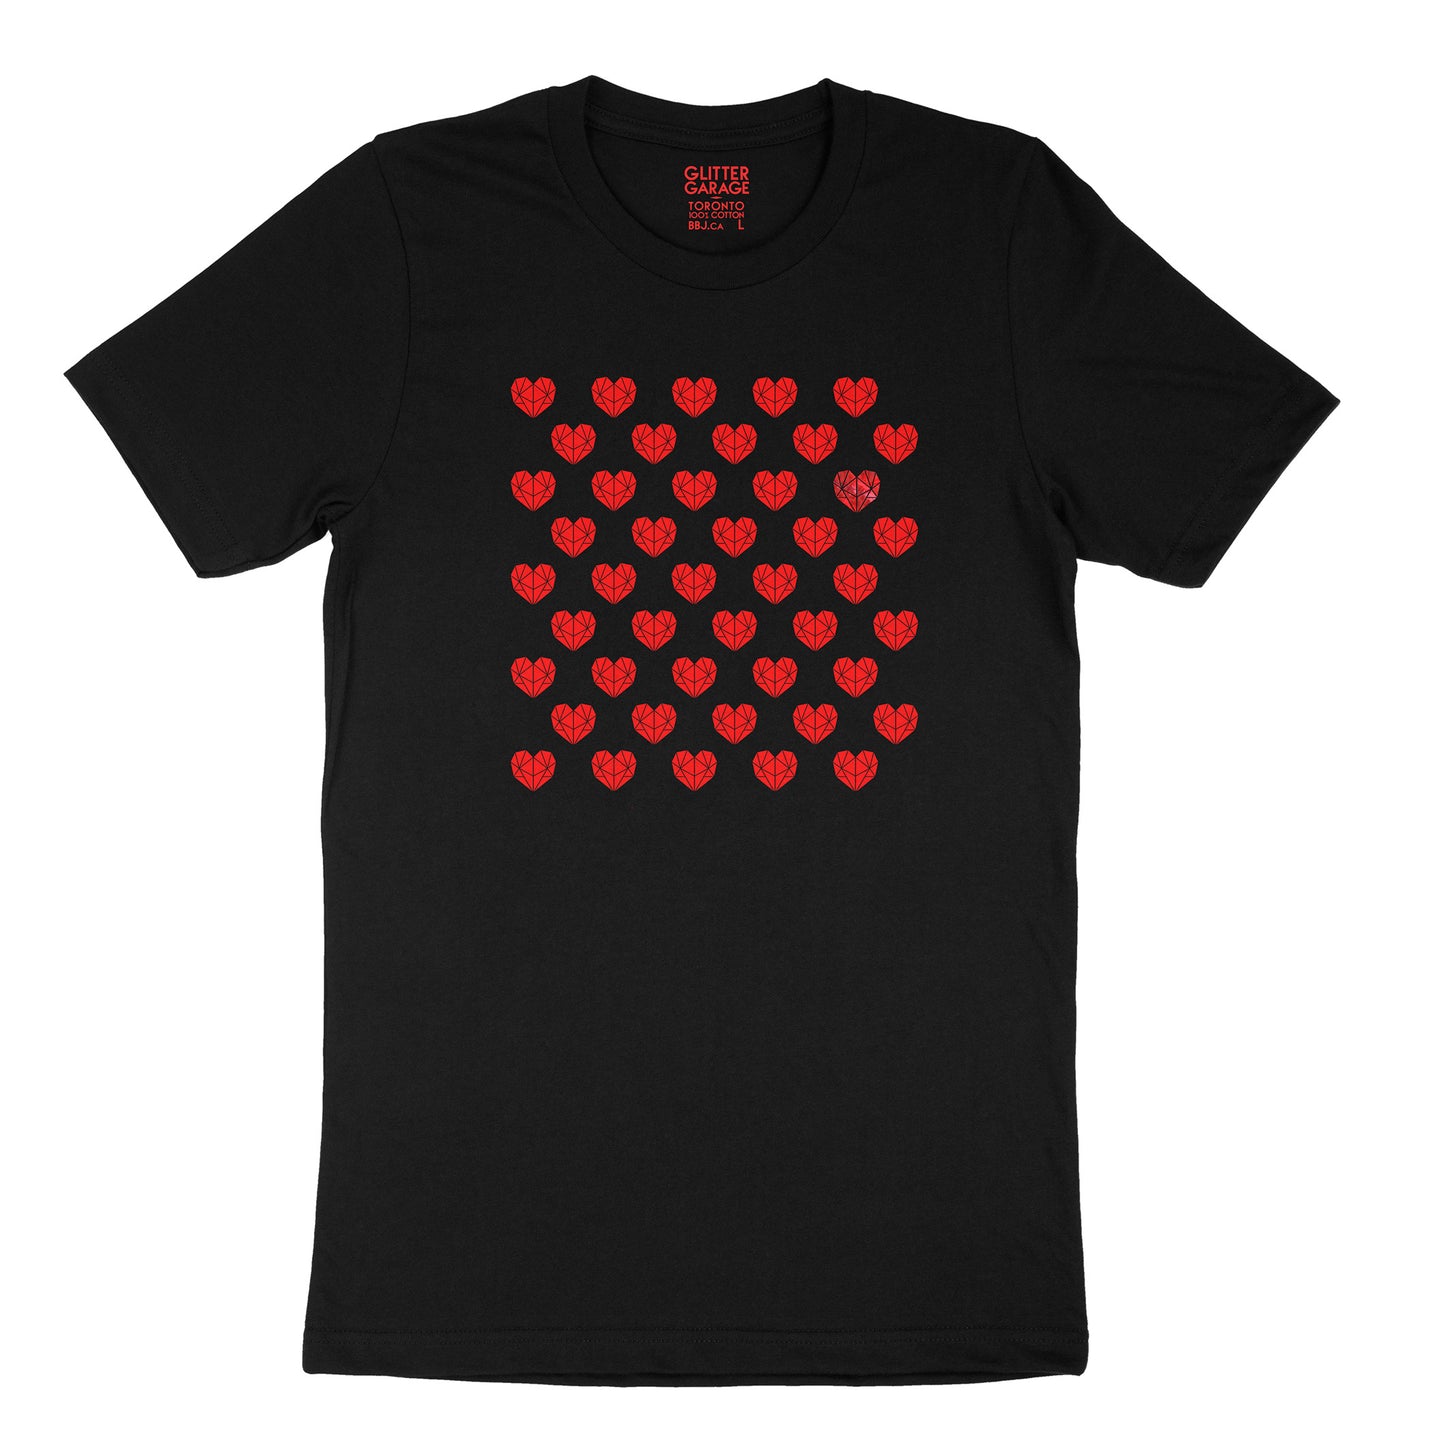 Many Hearts customizable tee - black unisex tee with 55 hearts  - red matte, metallic by BBJ / Glitter Garage